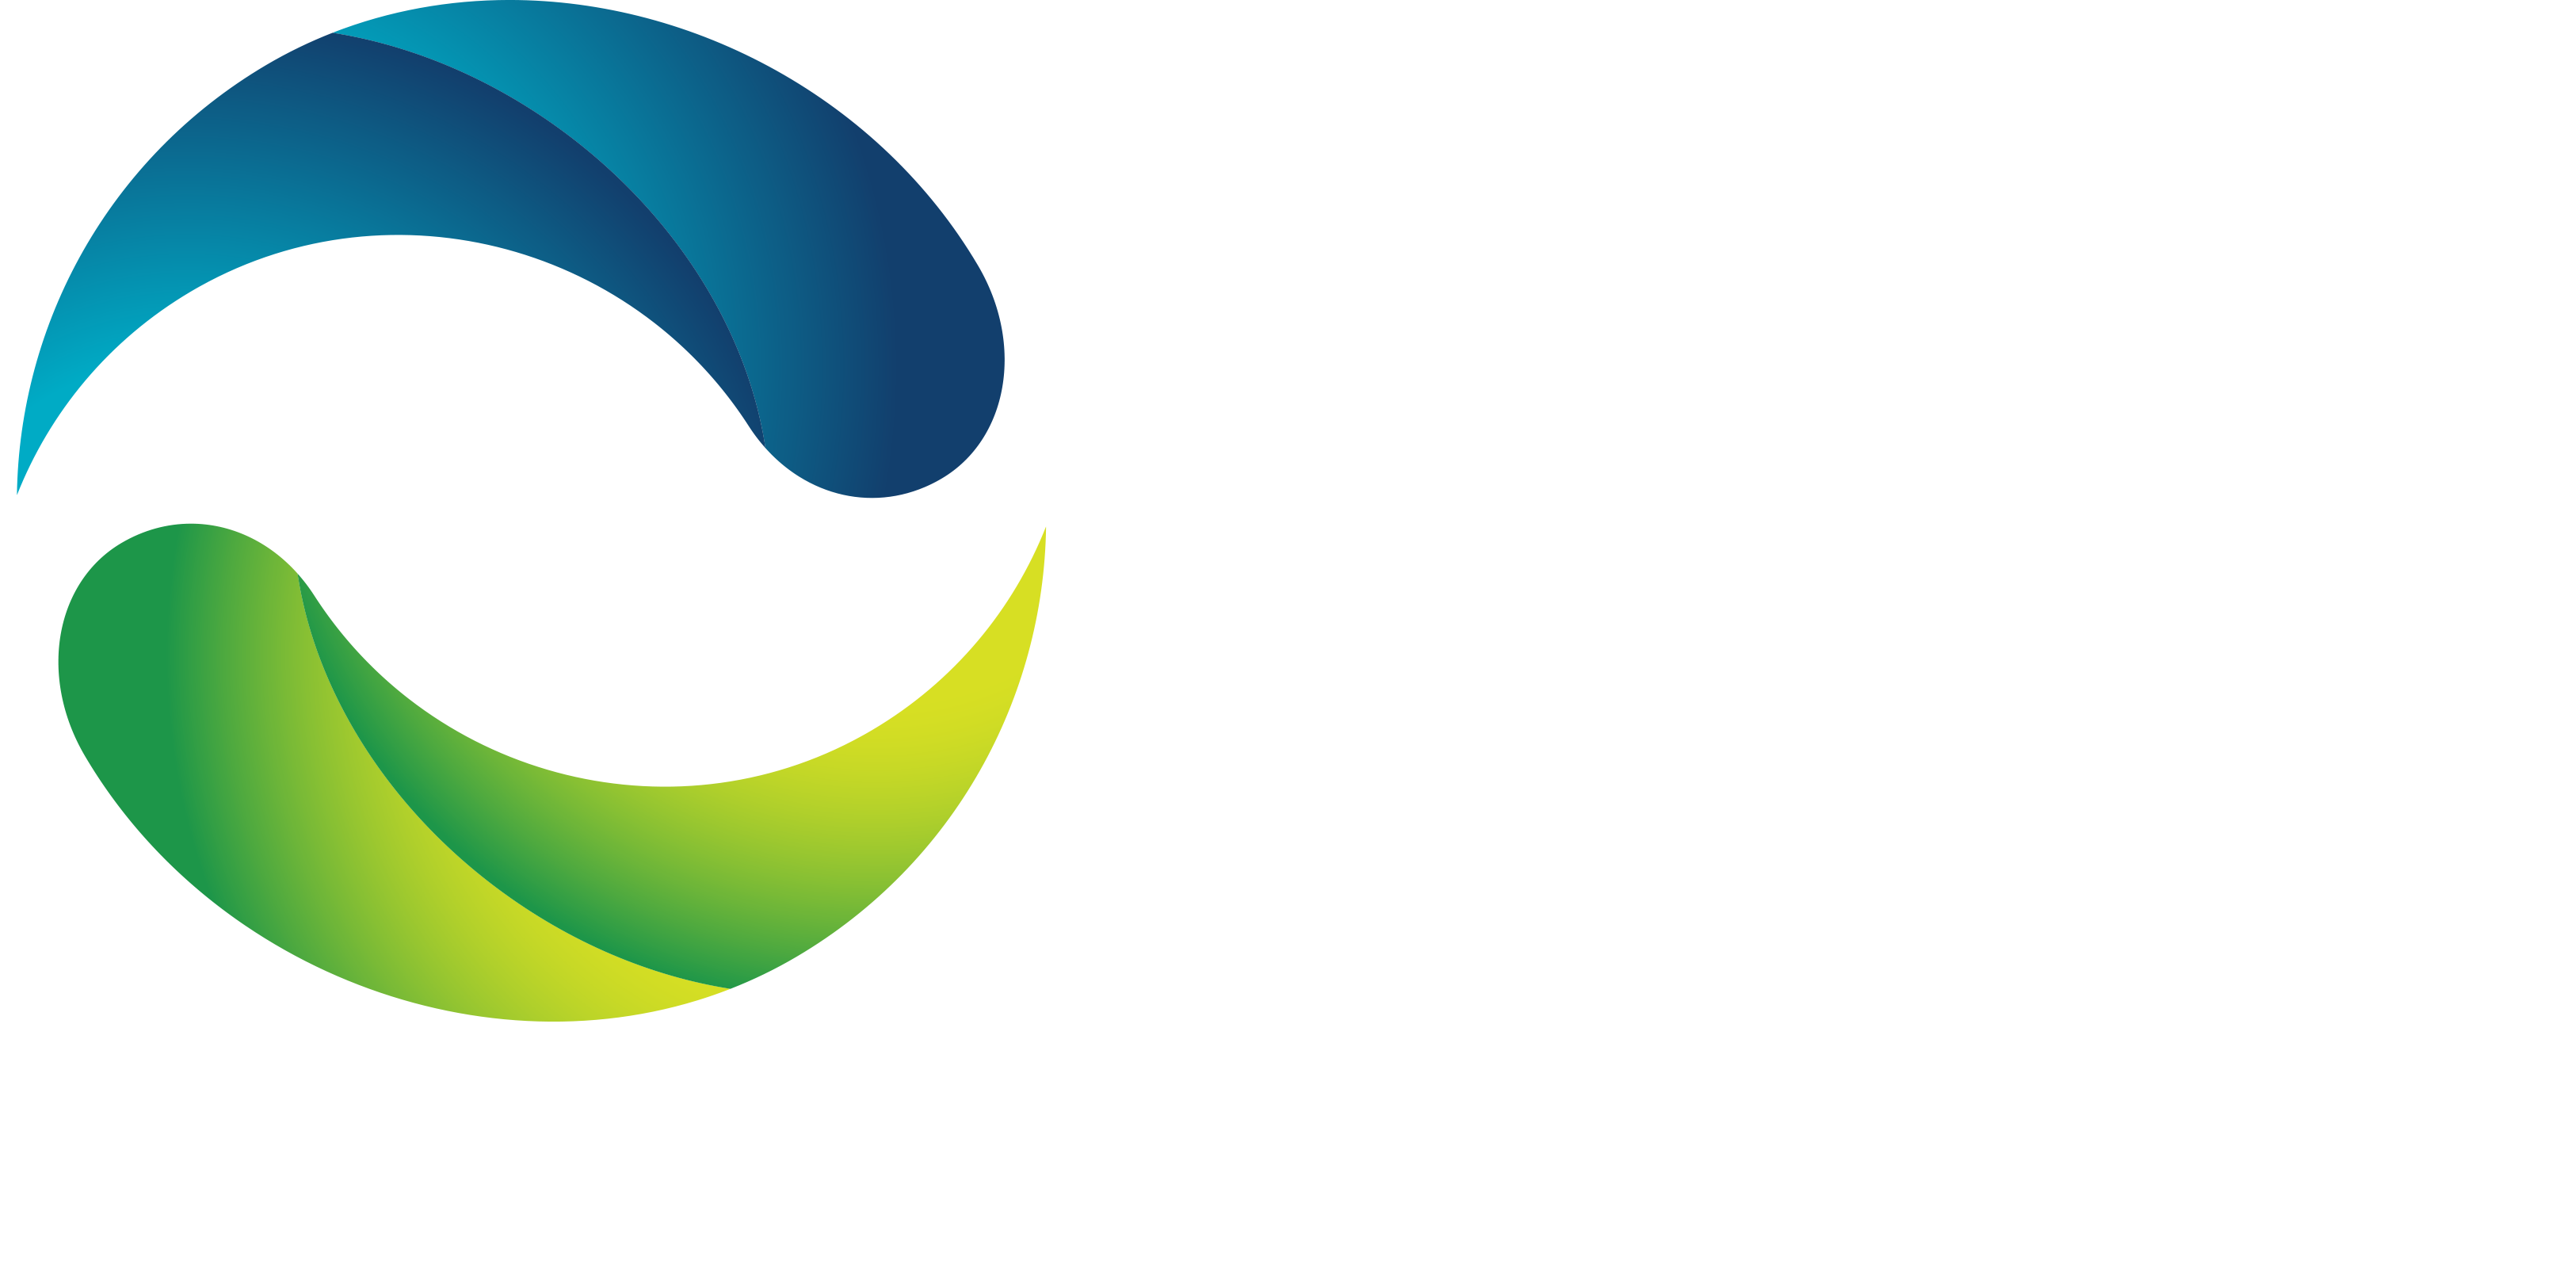 The Climate Board logo